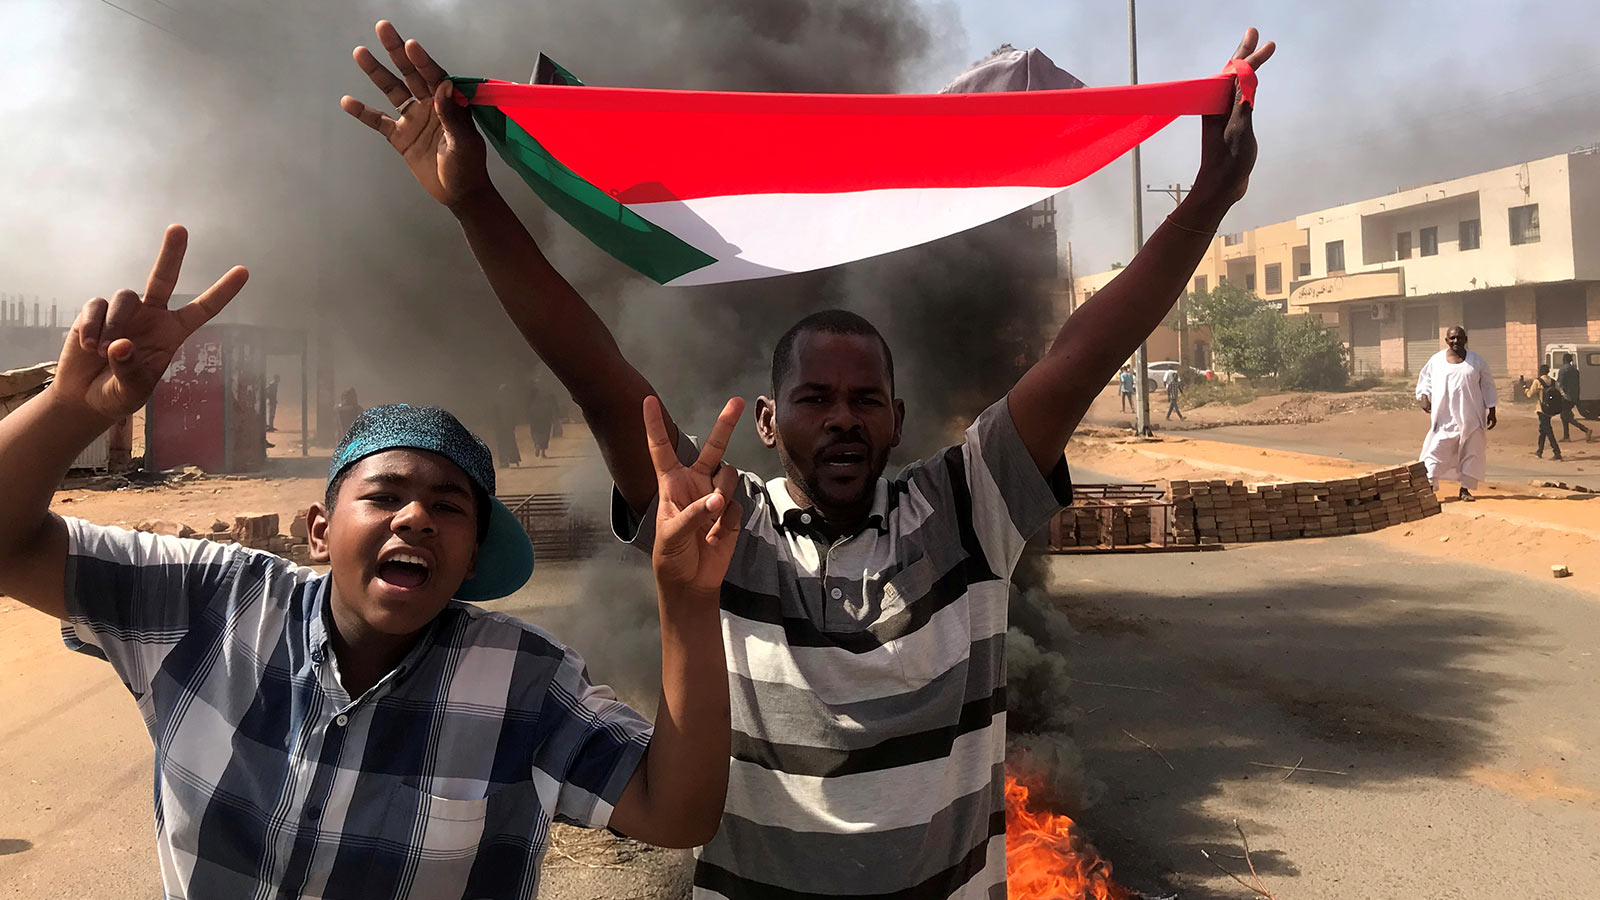 Protestors in Sudan